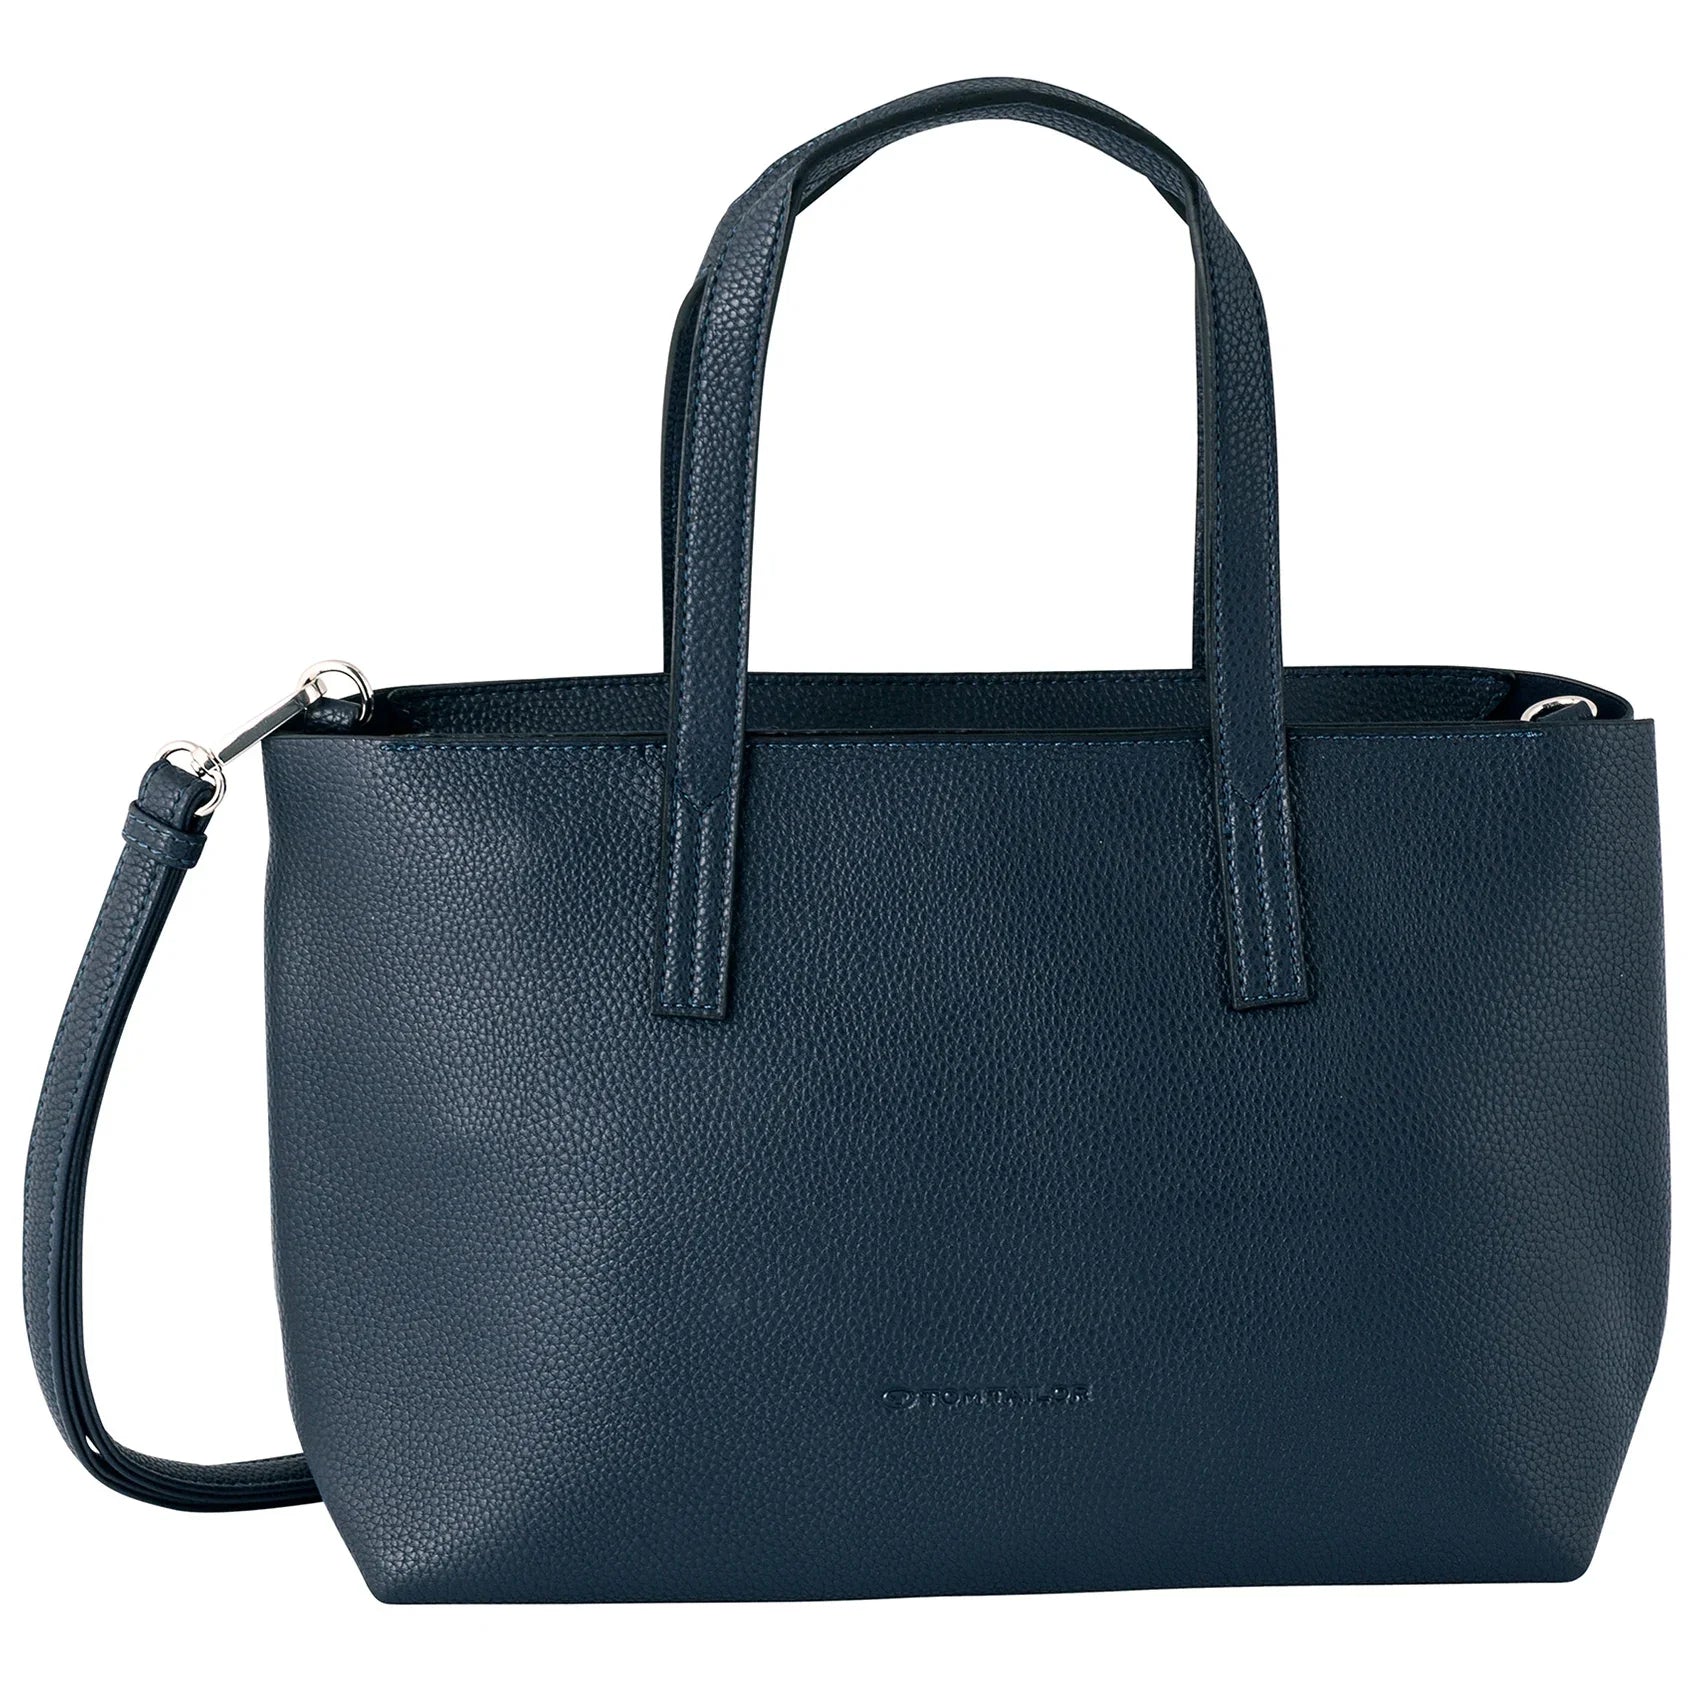 Tom Tailor Bags Marla Zip Shopper 34 cm - dark blue